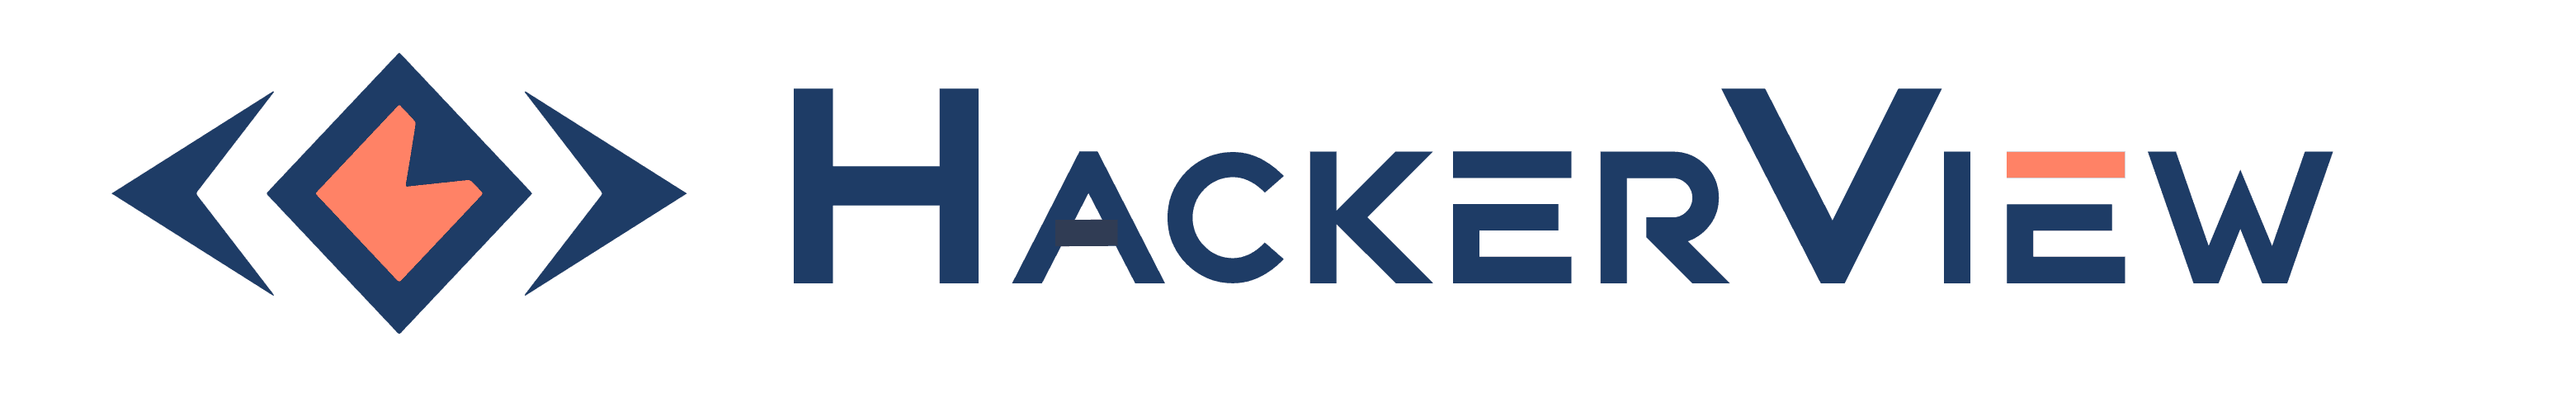 hackerview dark logo